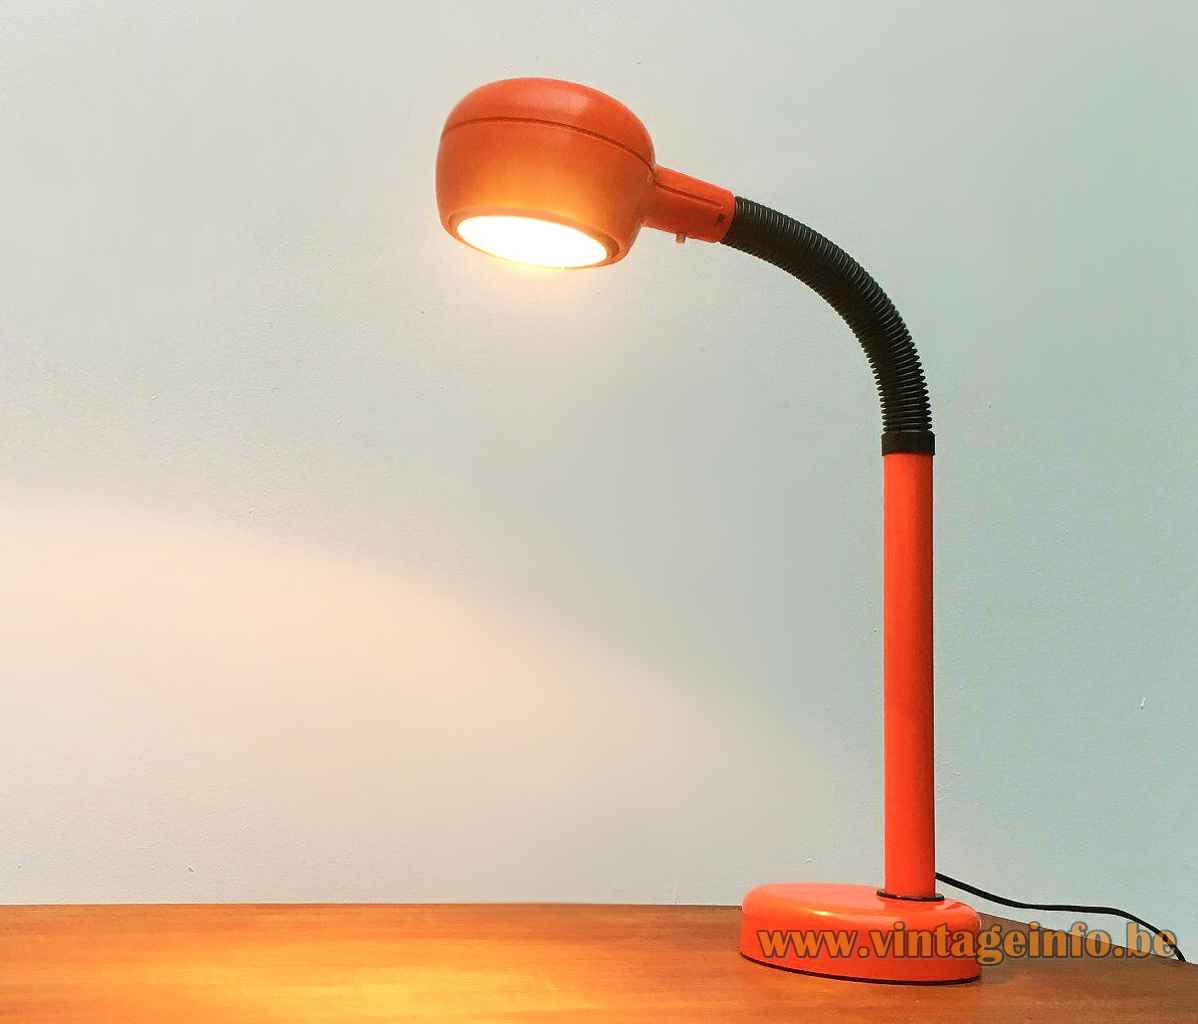 Fagerhults Cobra desk lamp round metal base & tube black flexible orange lampshade 1970s Sweden E27 socket